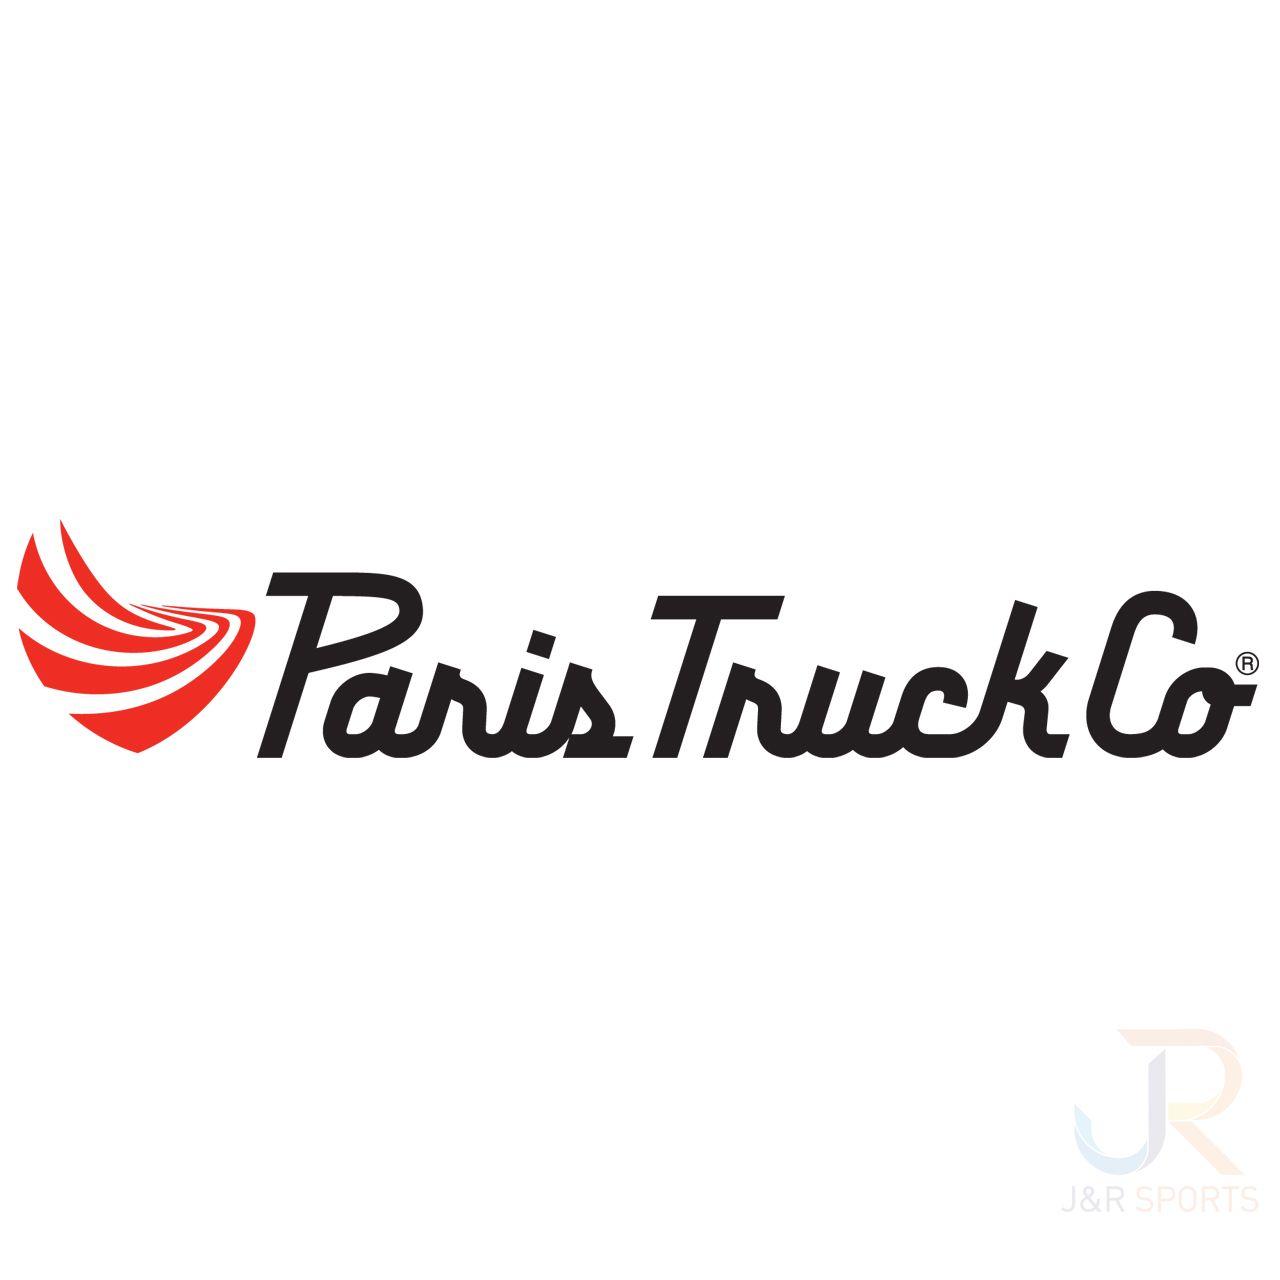 Paris Truck Logo - Paris Trucks - J & R Sports Distribution UK